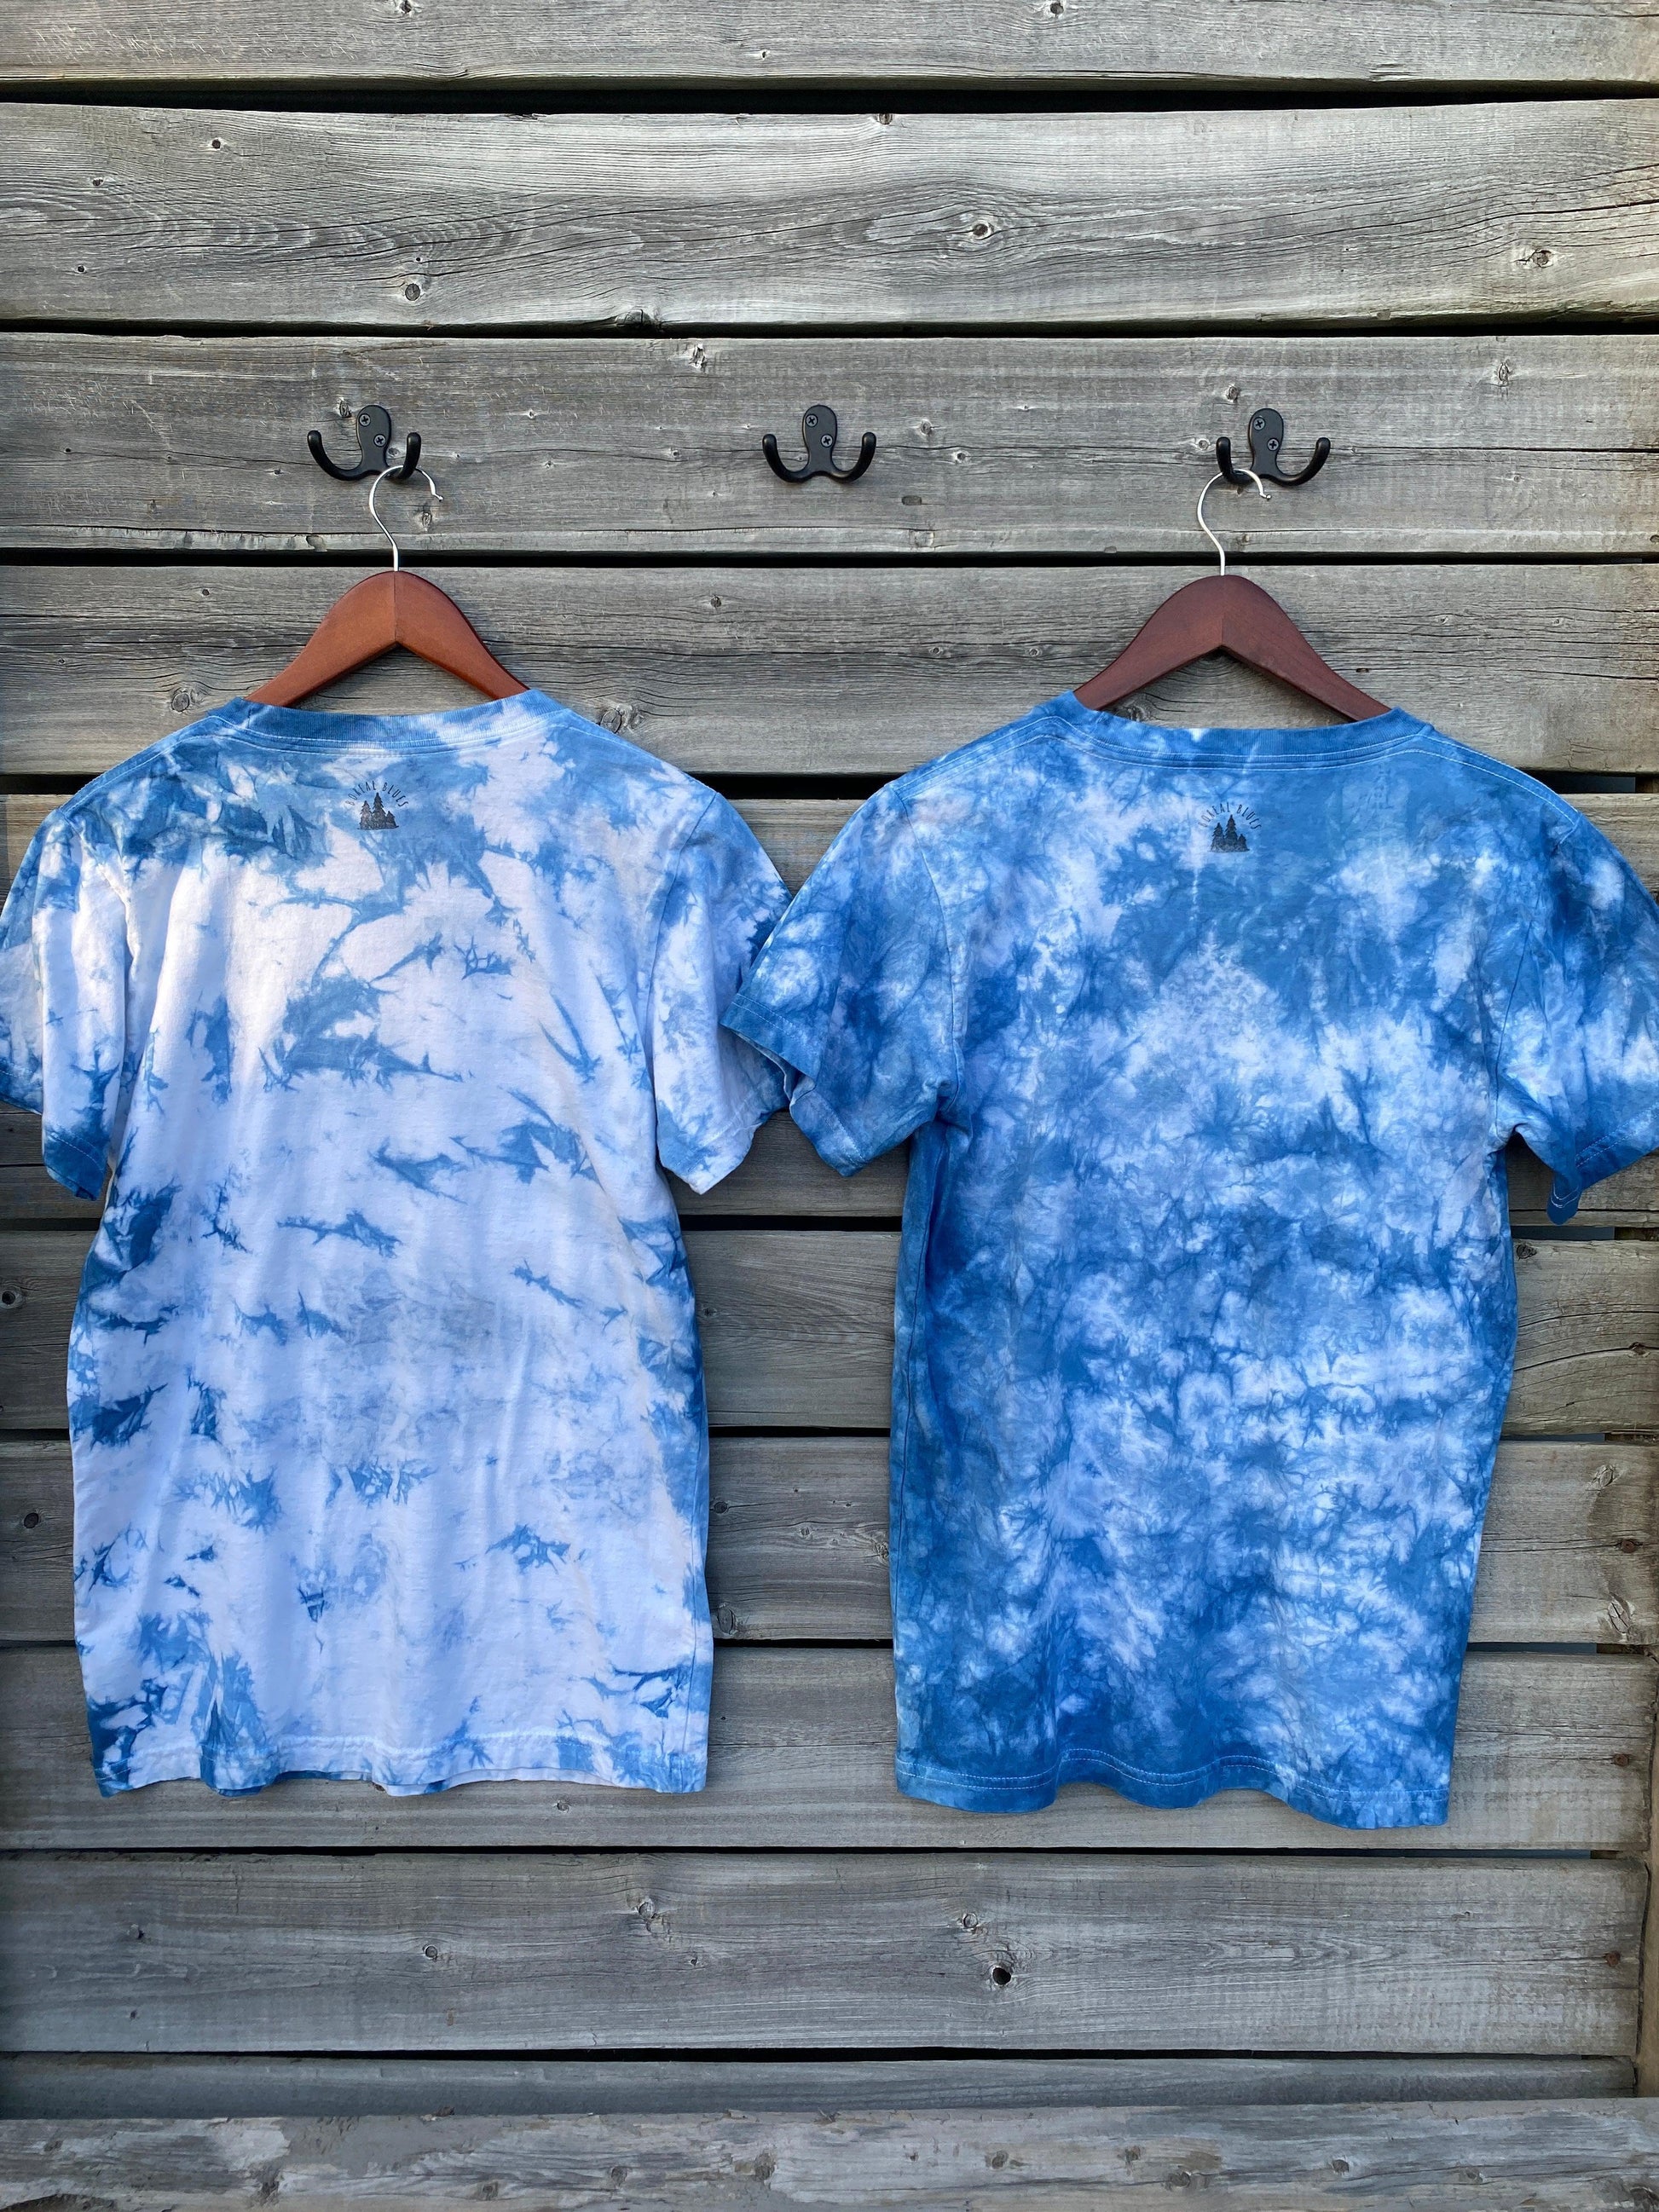 Organic Cotton T-Shirts